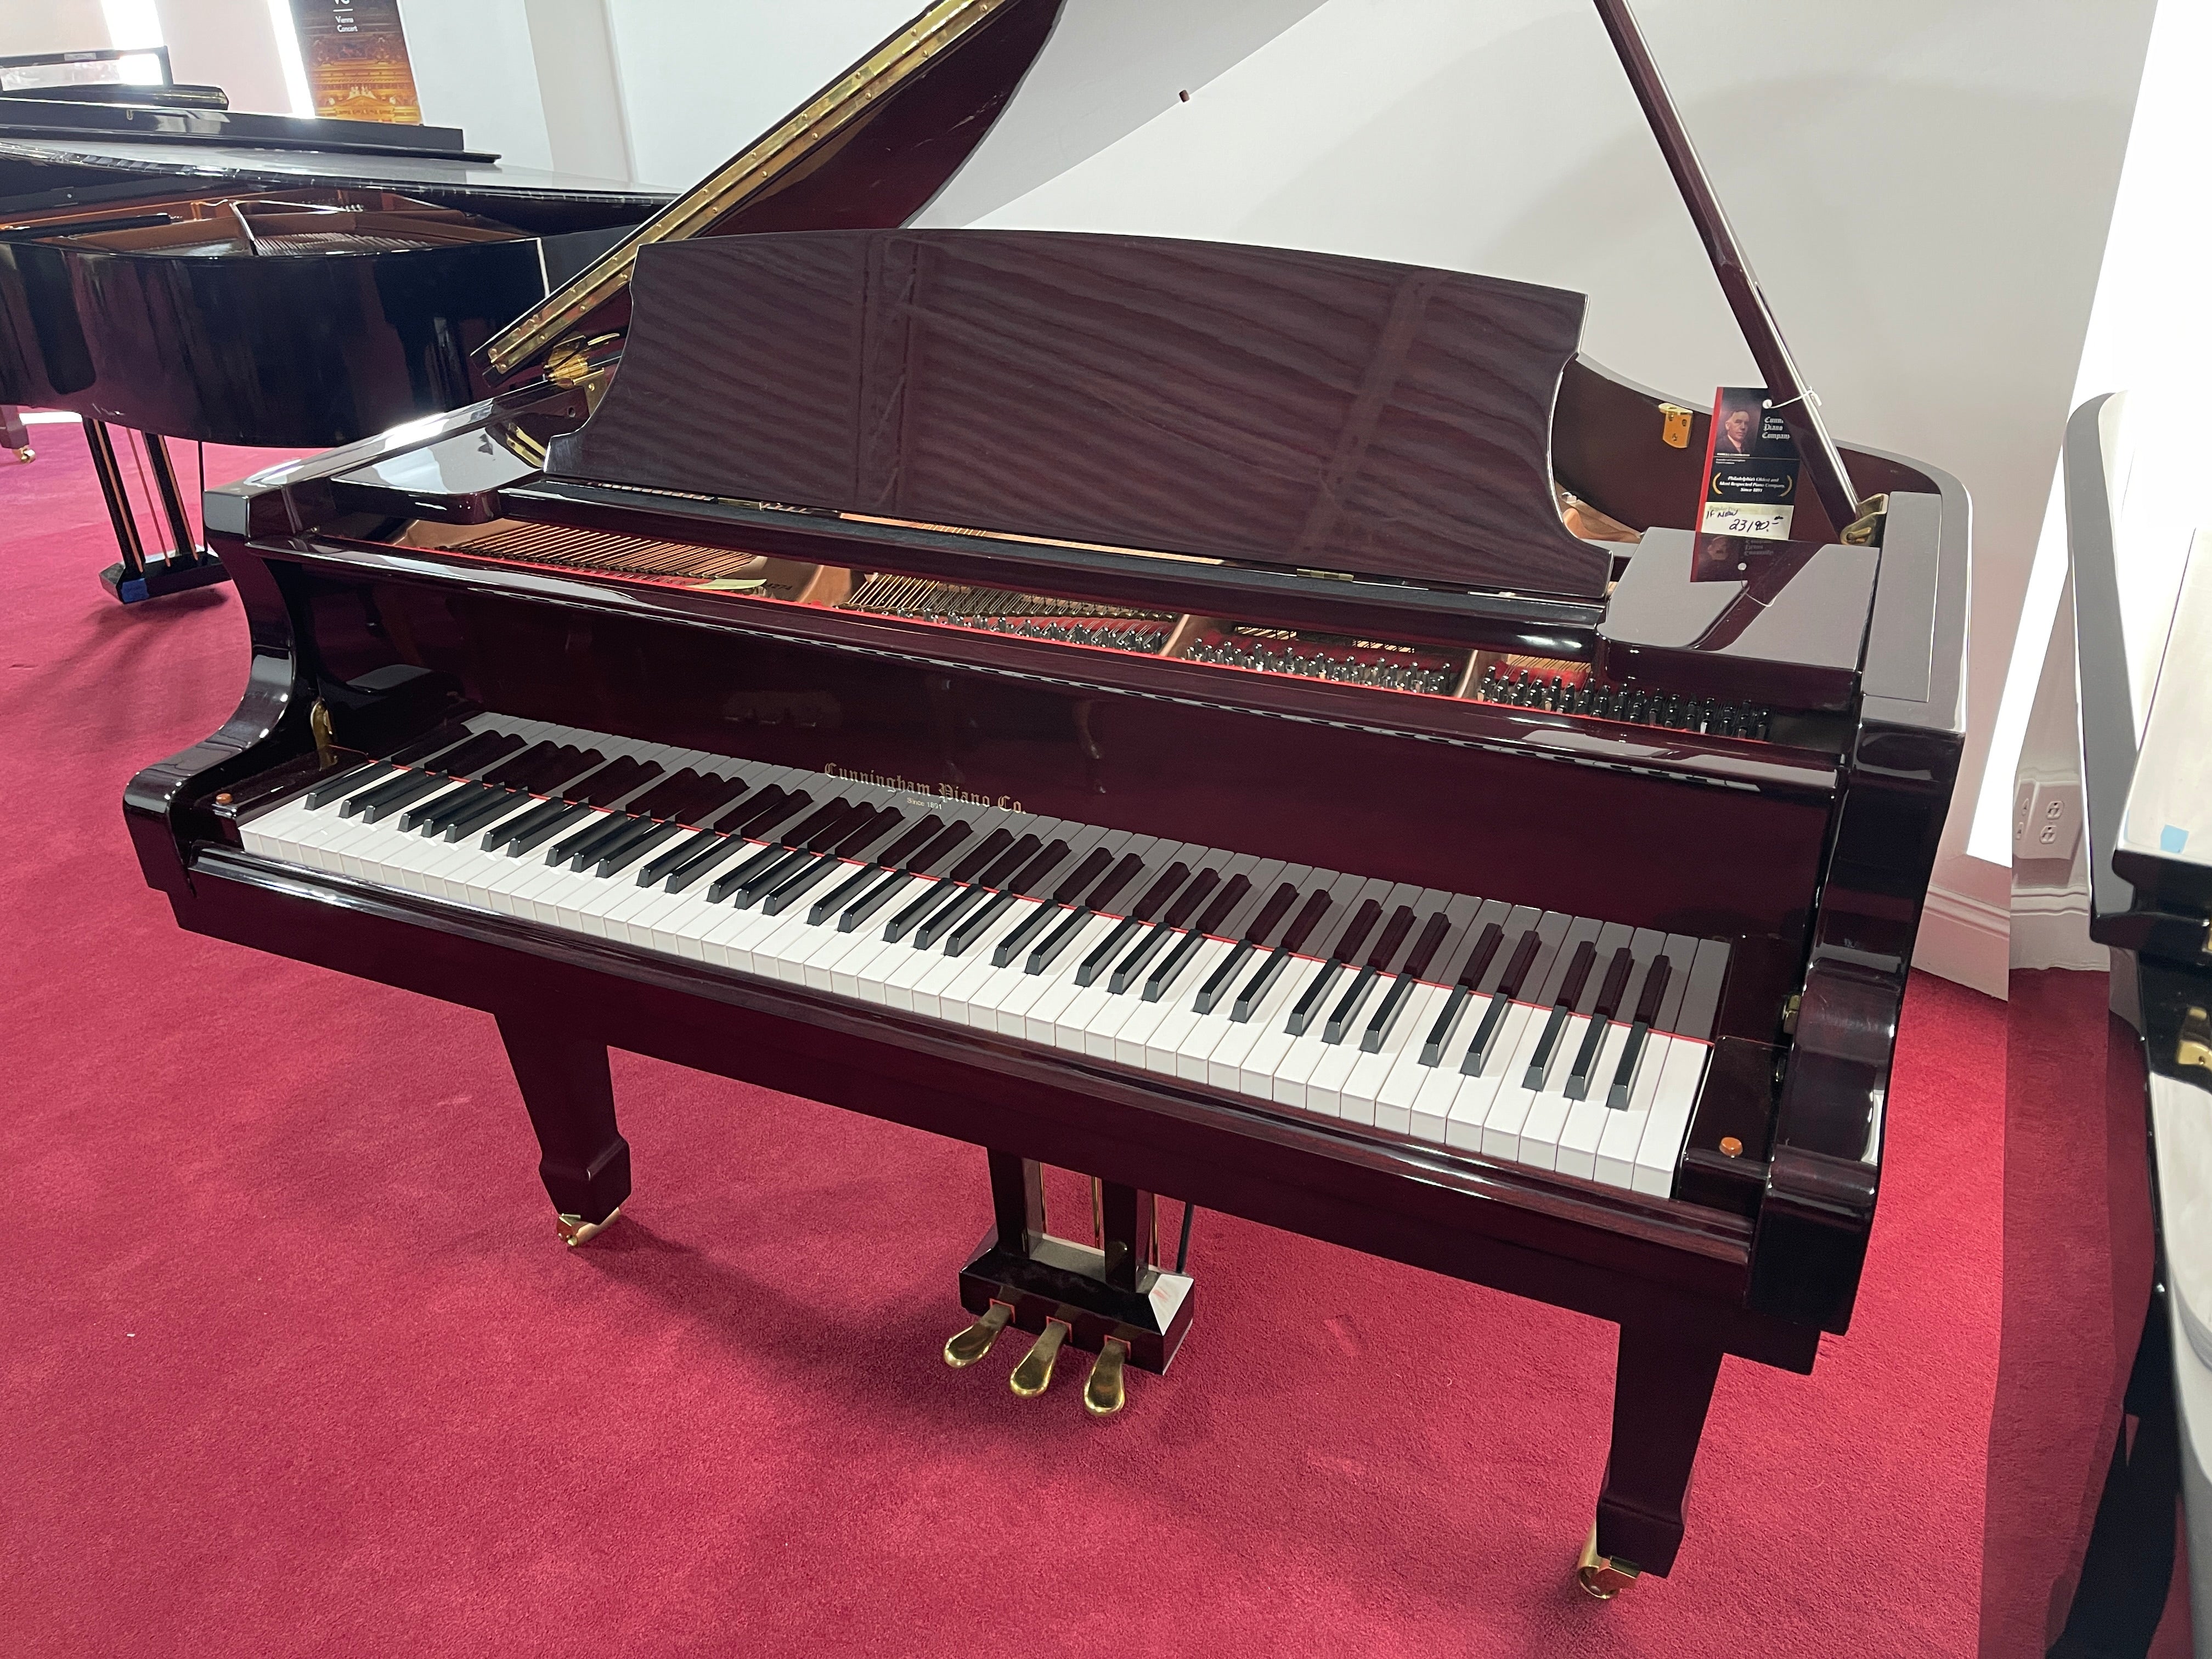 Cunningham 5'2" Grand Piano in Polished Mahogany Finish